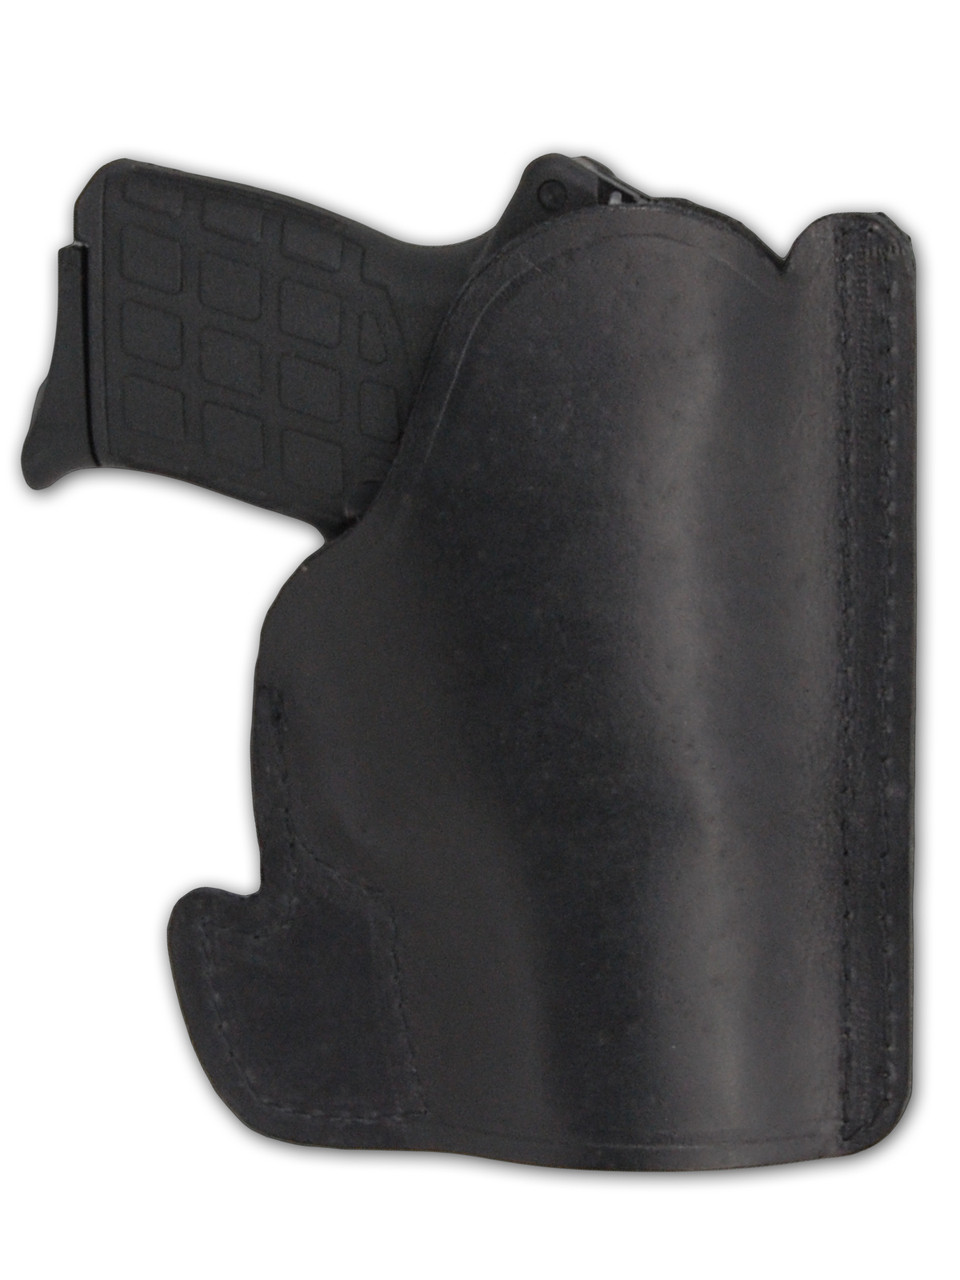 Black Leather Pocket Holster for Kimber Micro 9mm